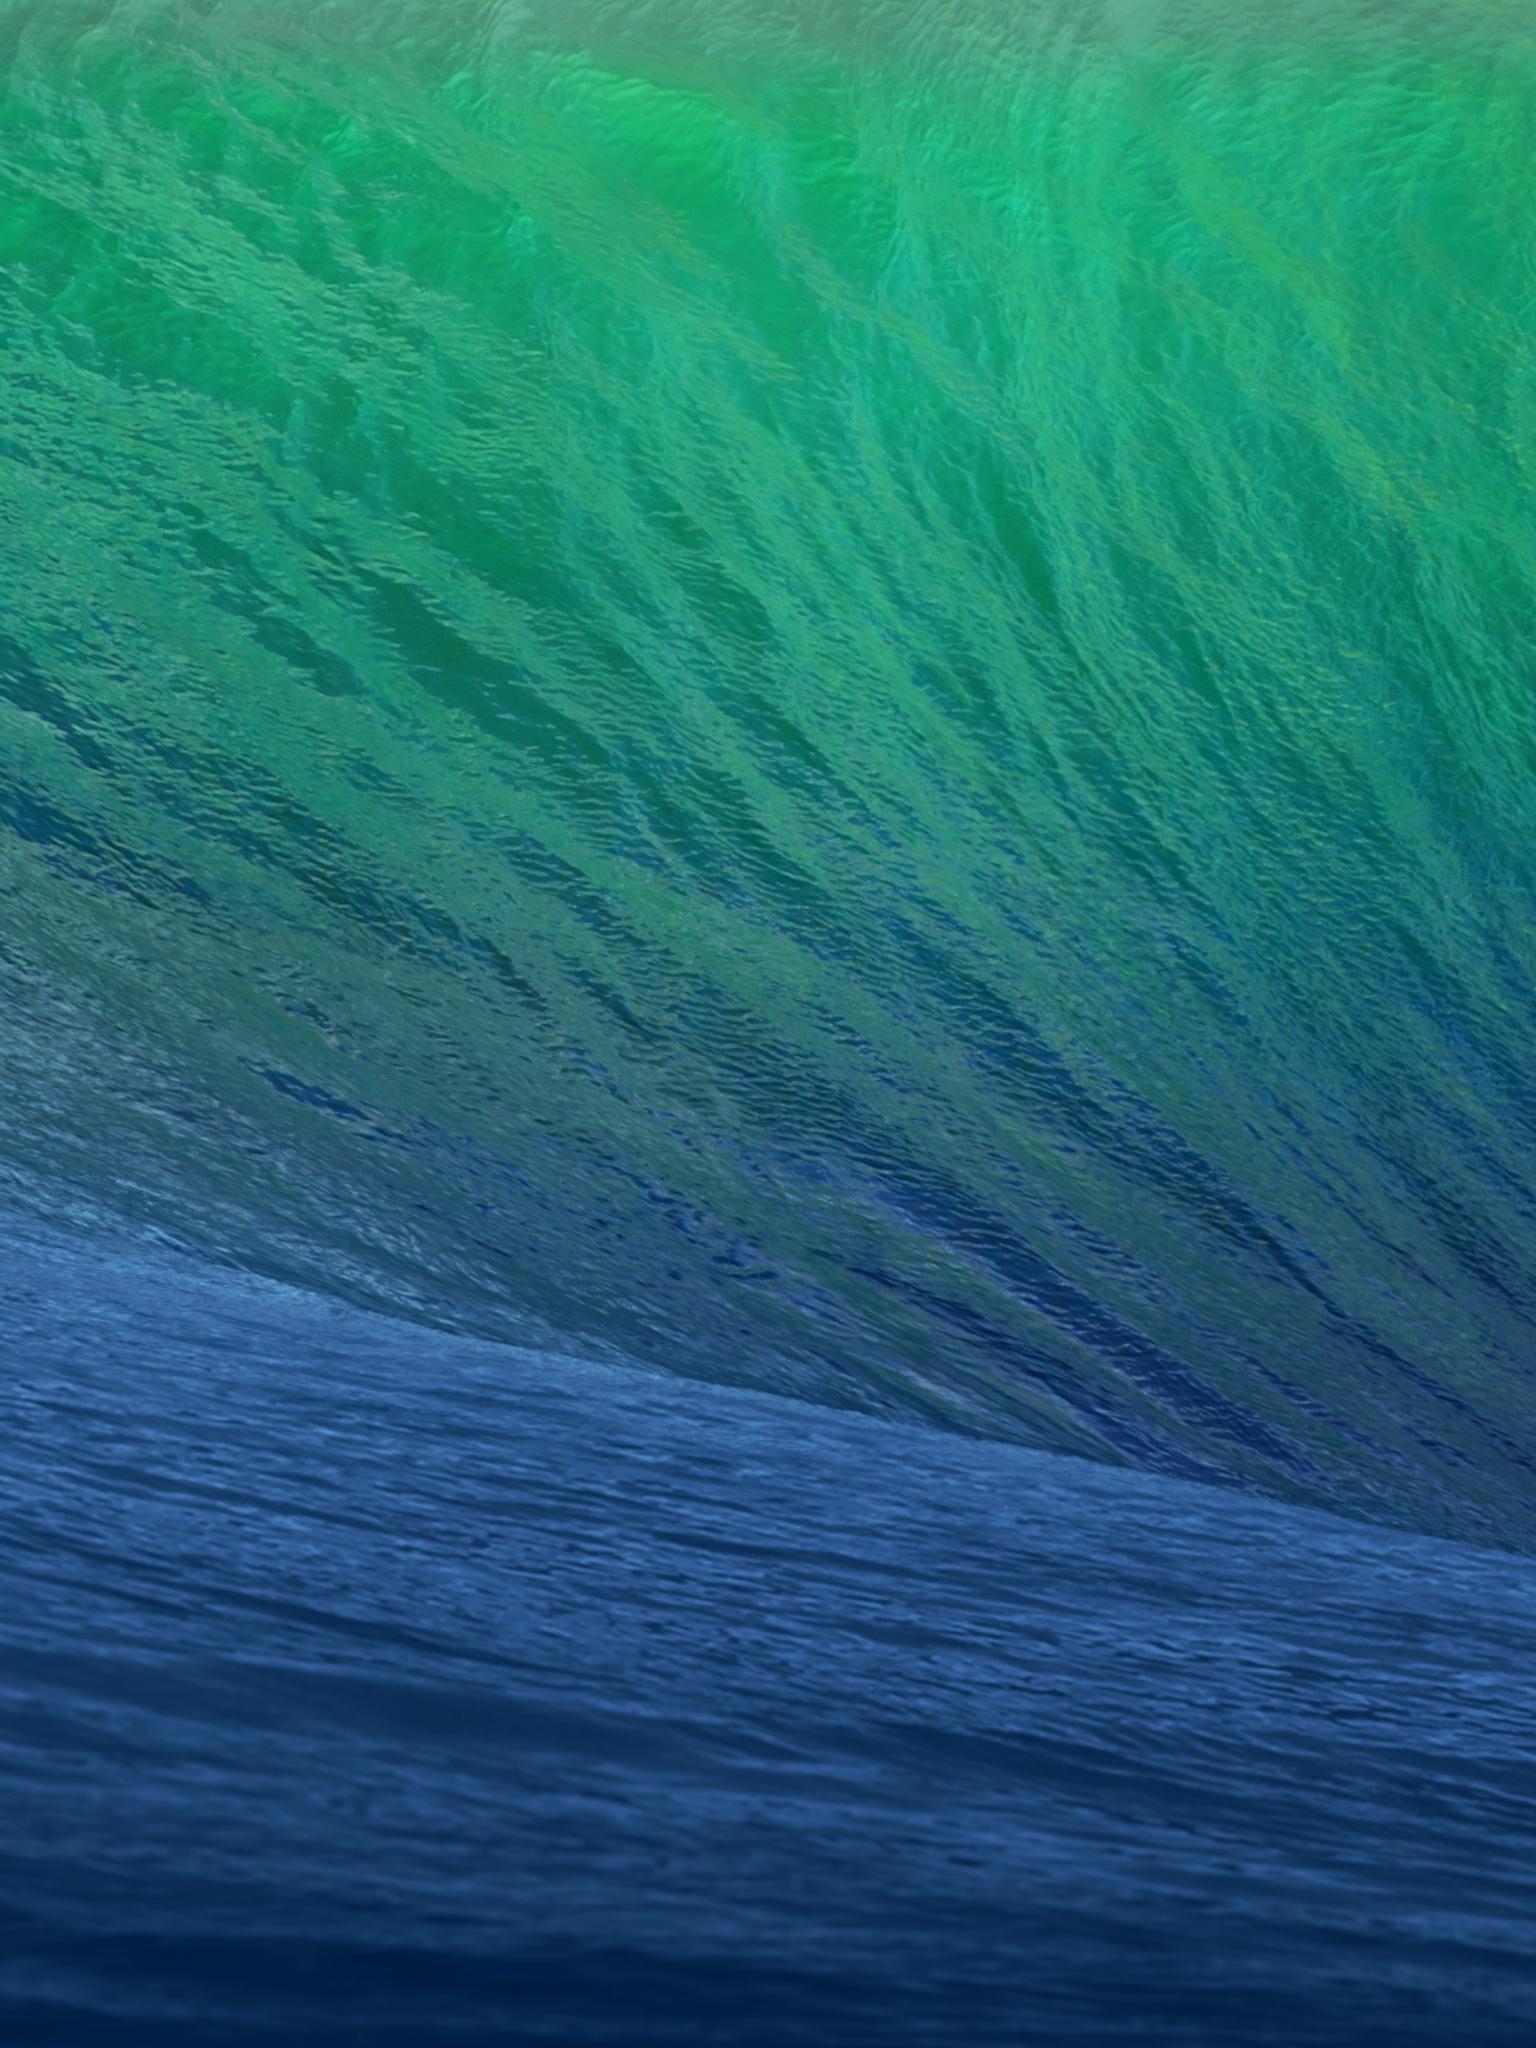 Download 1536x2048 OS X Mavericks Wave iPad 4 wallpaper 1536x2048